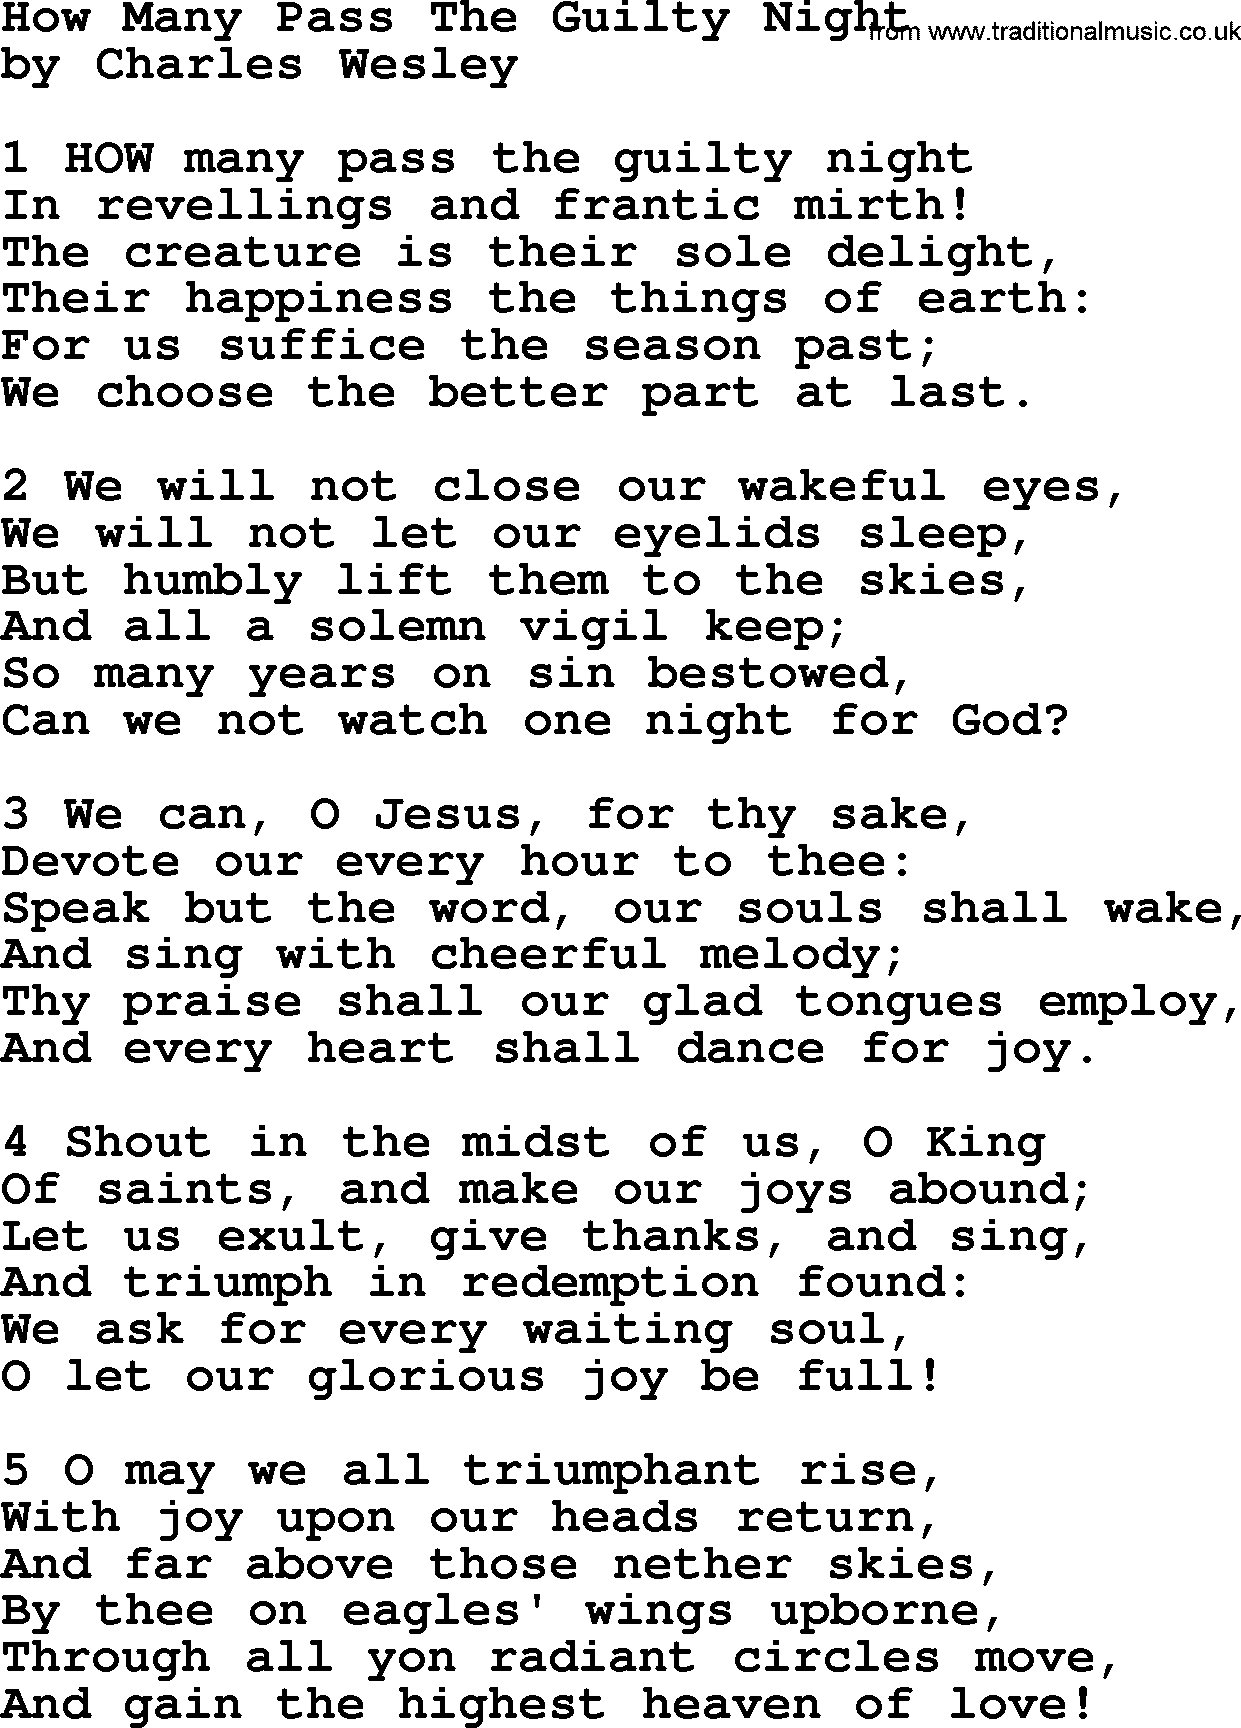 Charles Wesley hymn: How Many Pass The Guilty Night, lyrics